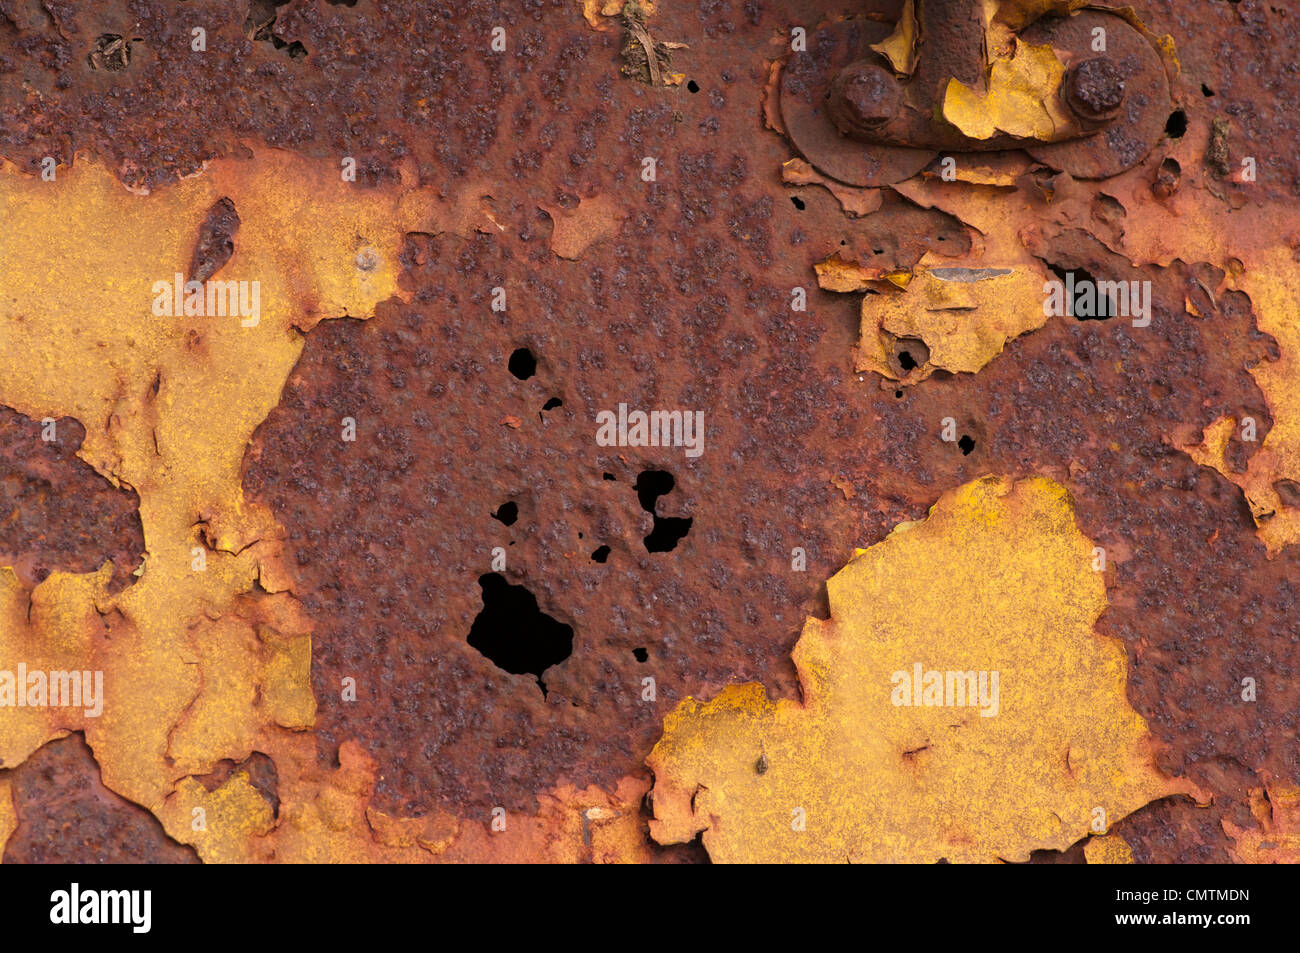 https://c8.alamy.com/compes/cmtmdn/rusty-rusted-metal-corroido-corrosion-oxidacion-cmtmdn.jpg